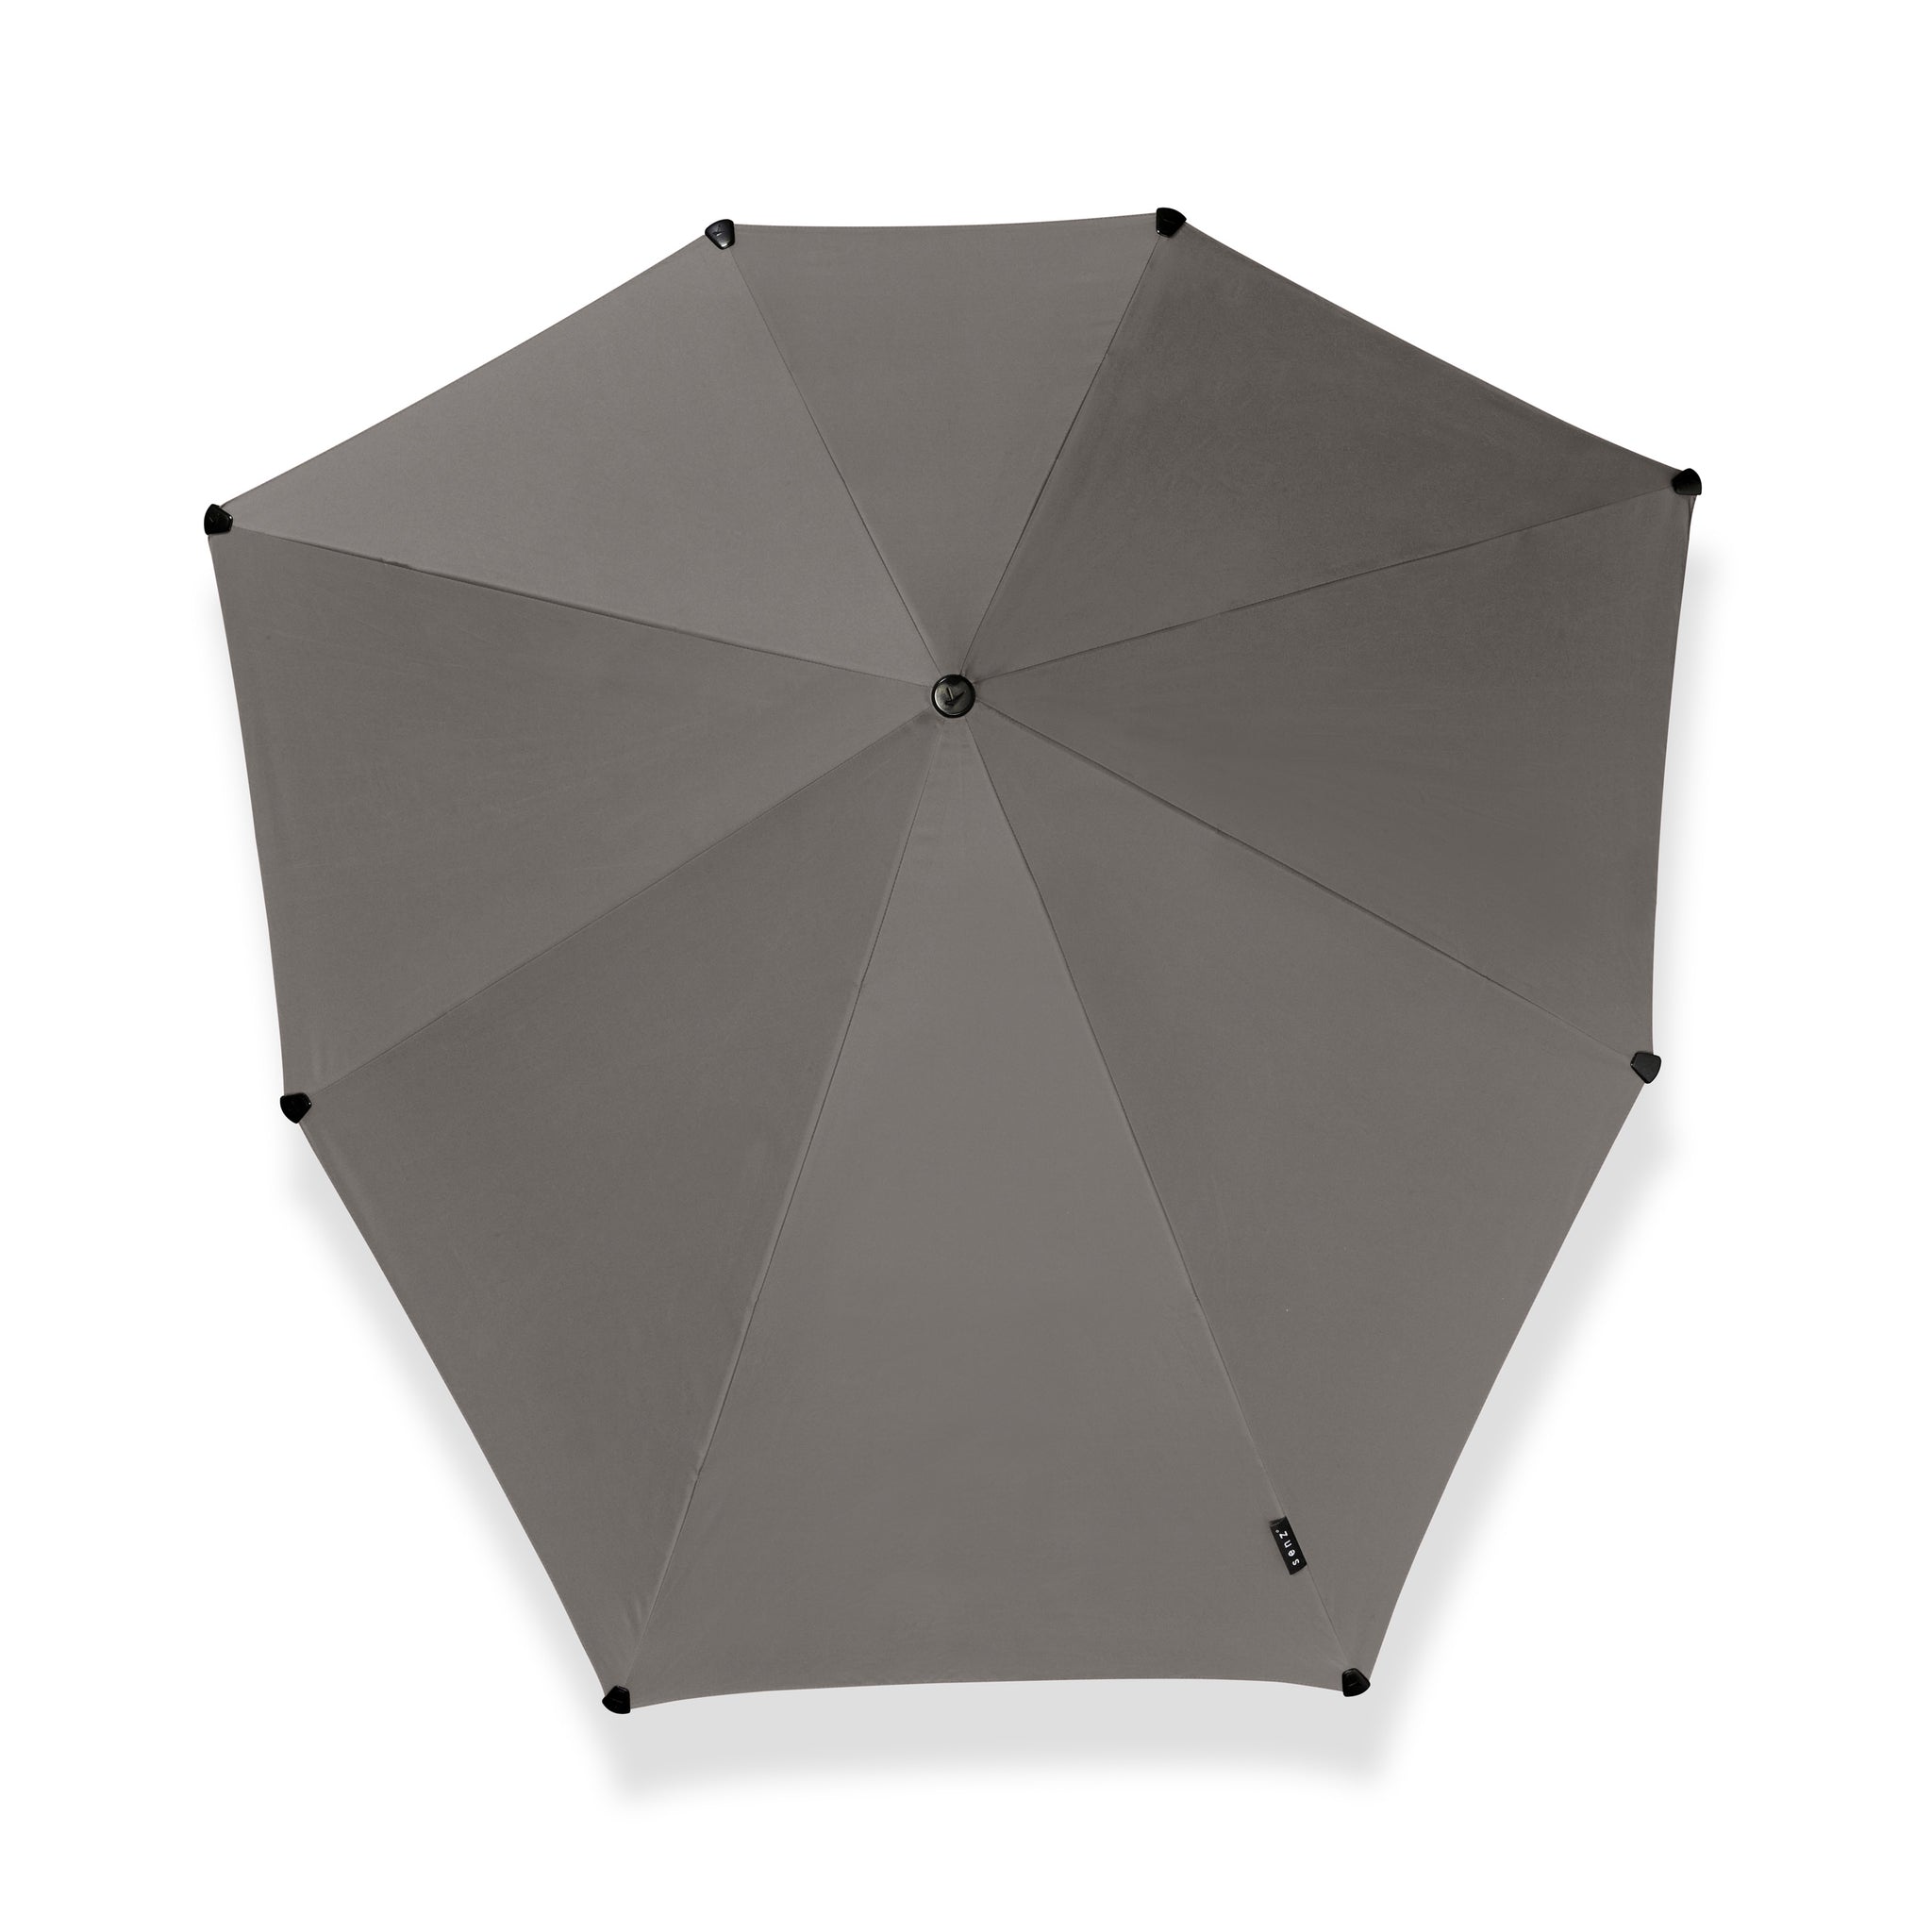 Senz Storm Paraplu Large│Silk Grey│Senz Umbrella│product foto bovenkant